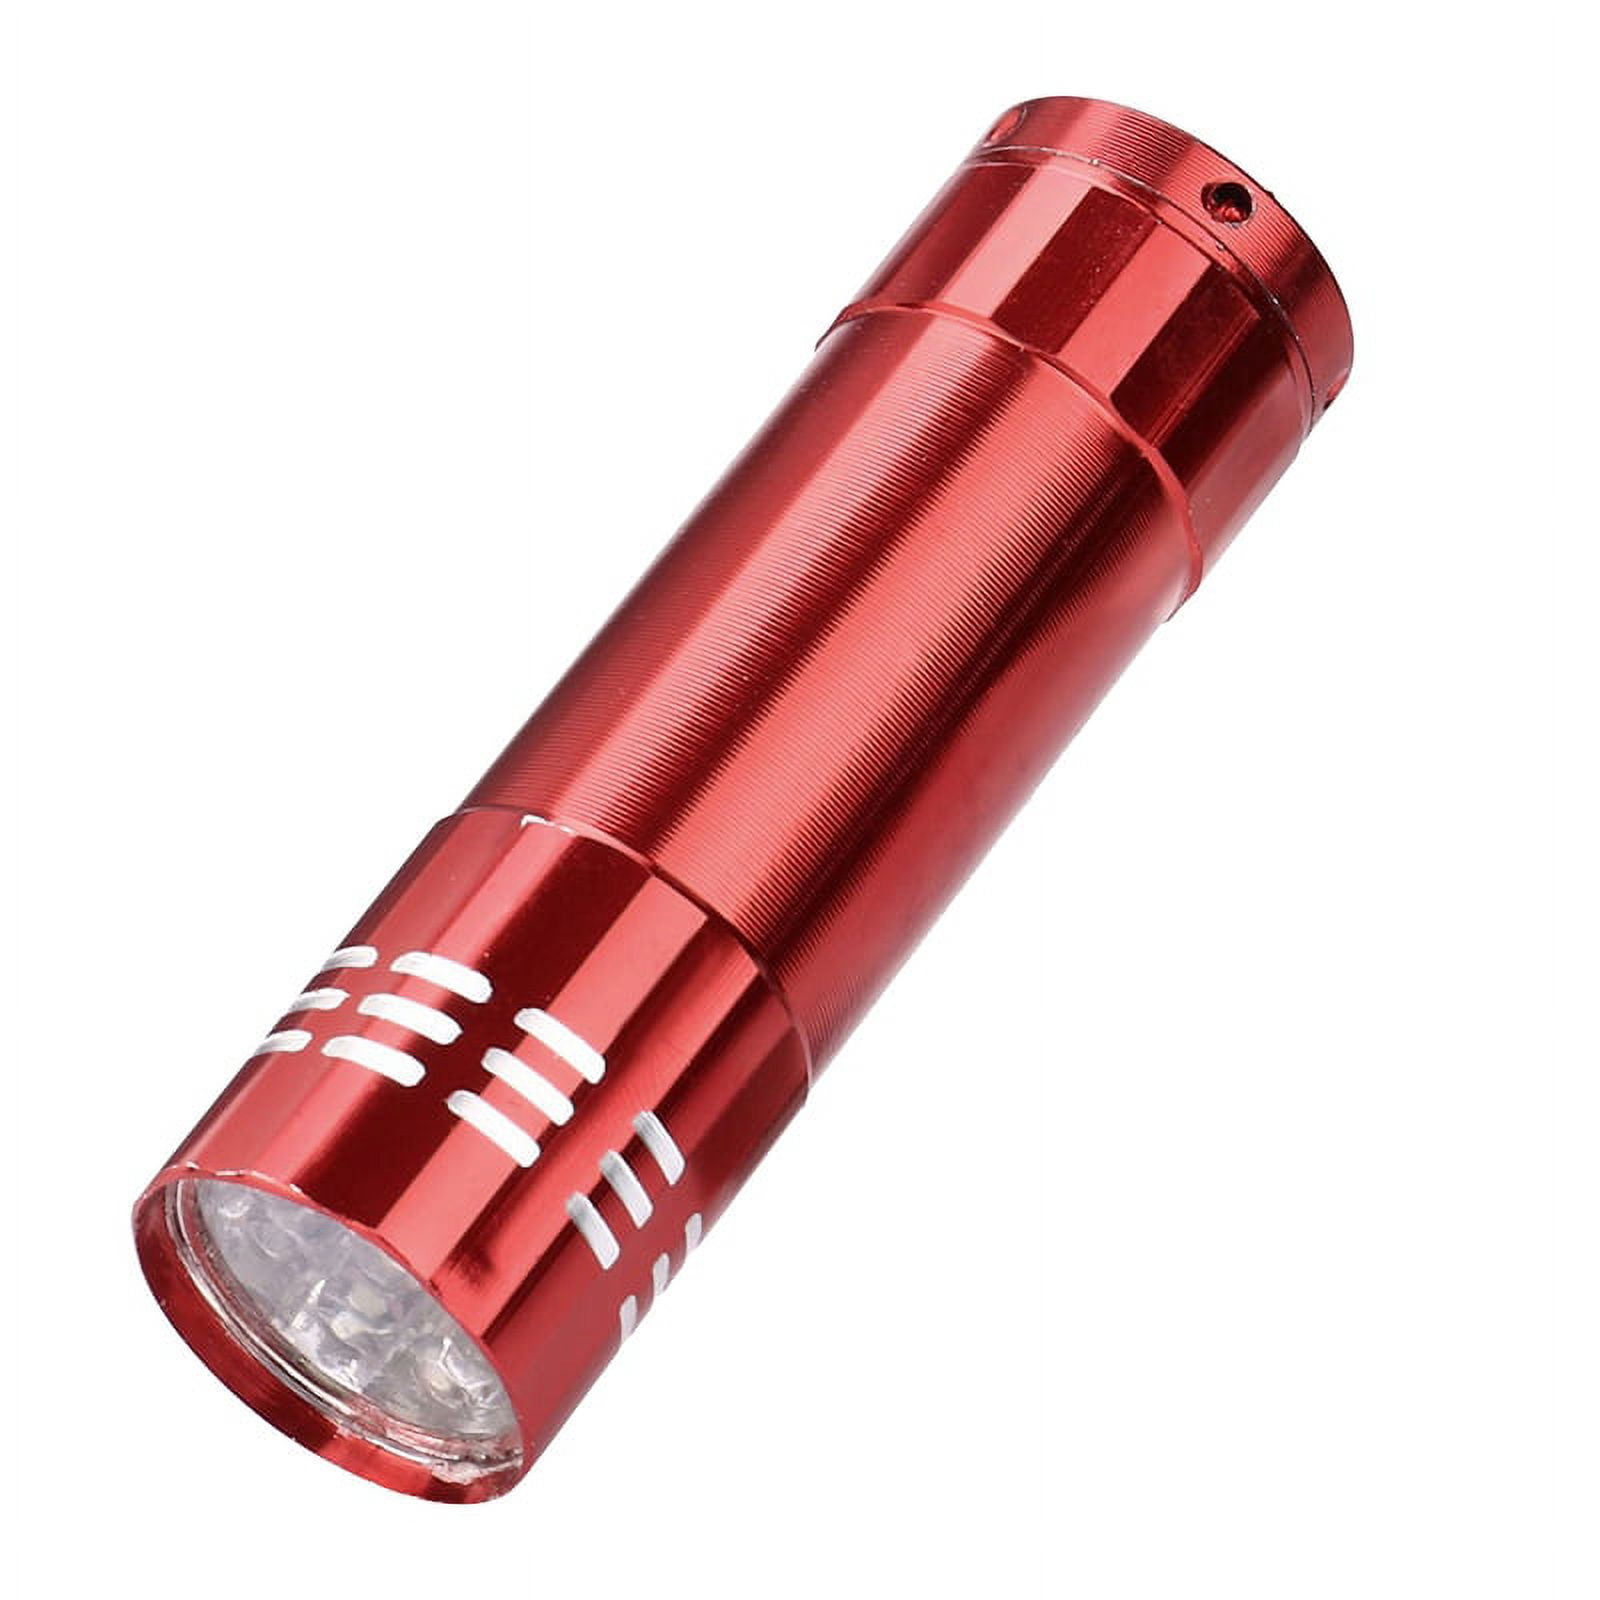 Mini Lampe Torche Aluminium 9 LED - Eclairage - Store Line